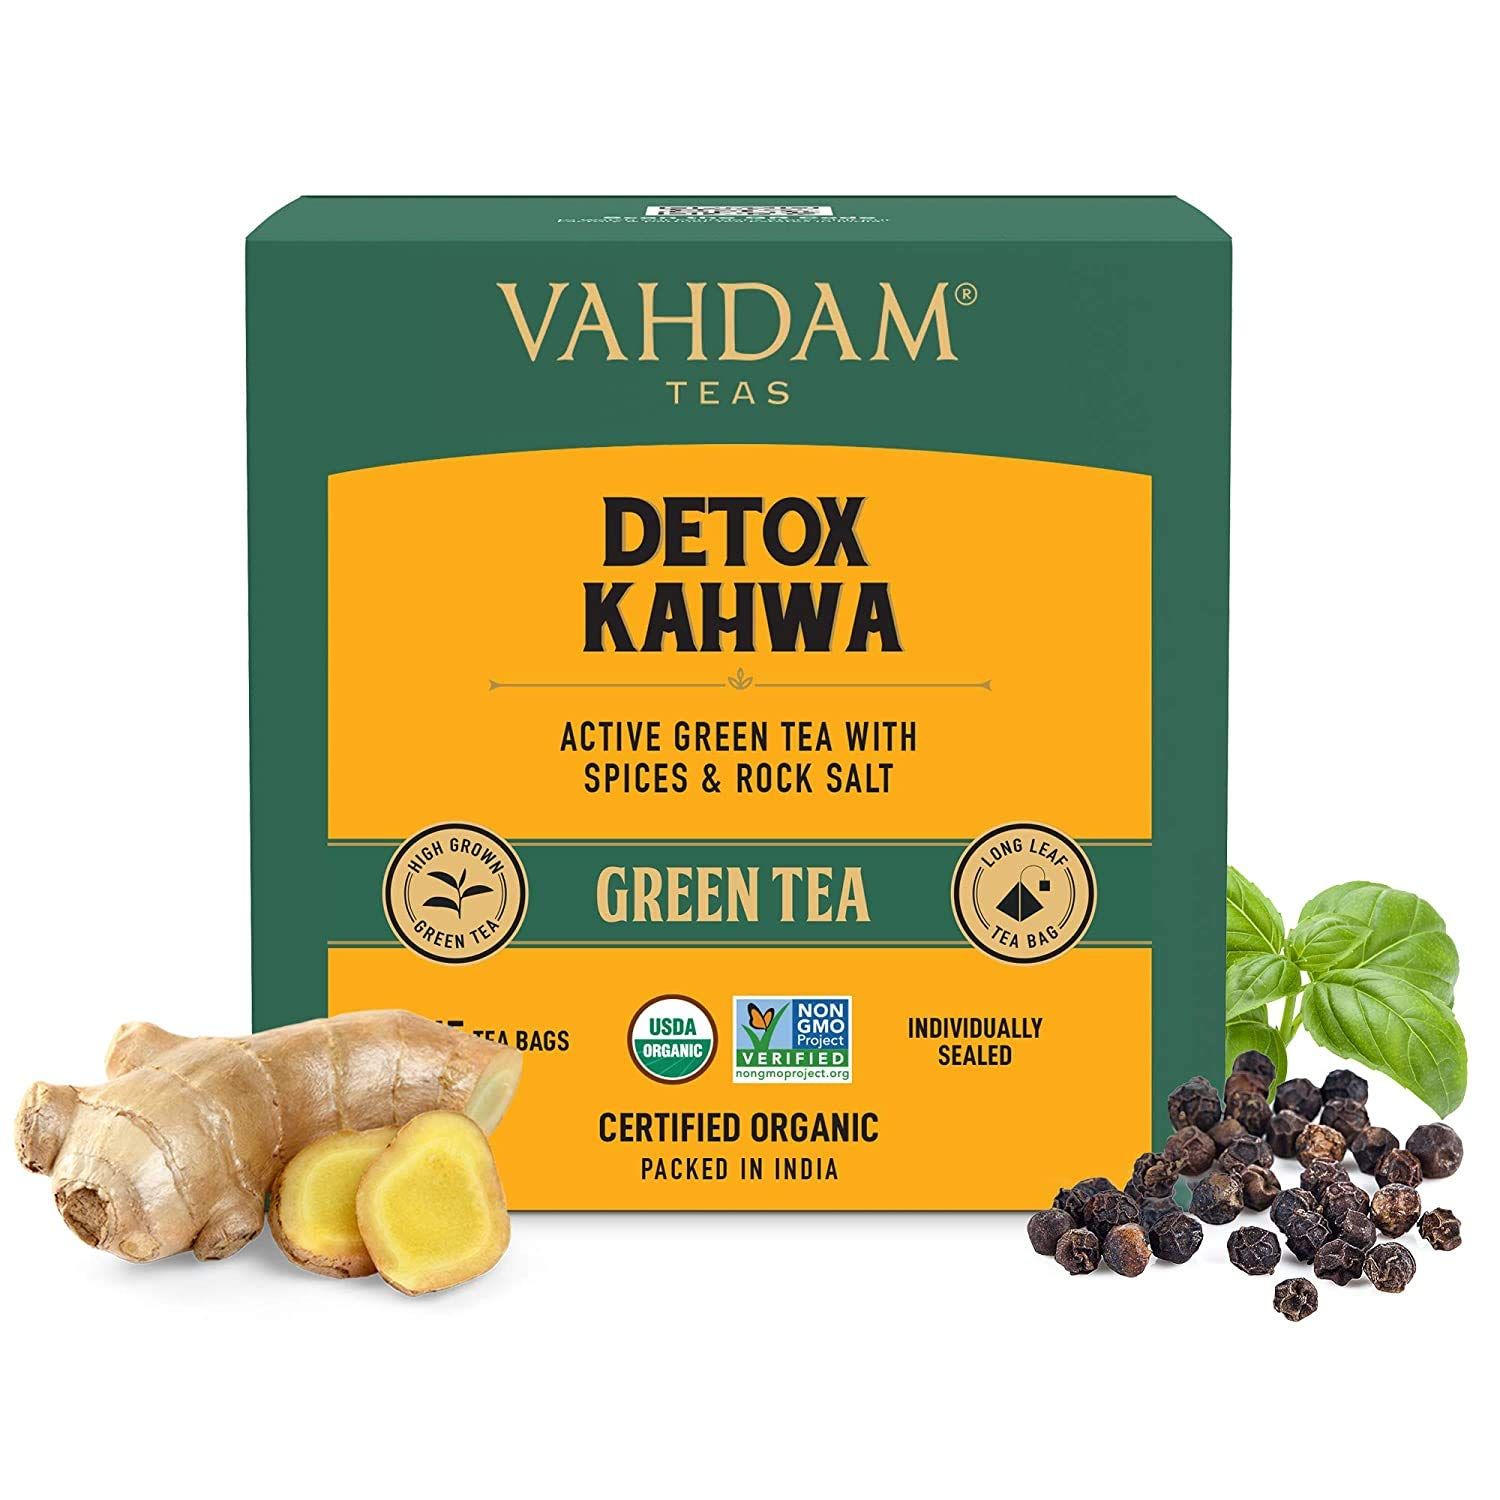 Vahdam Organic Detox Kahwa Green Tea Image